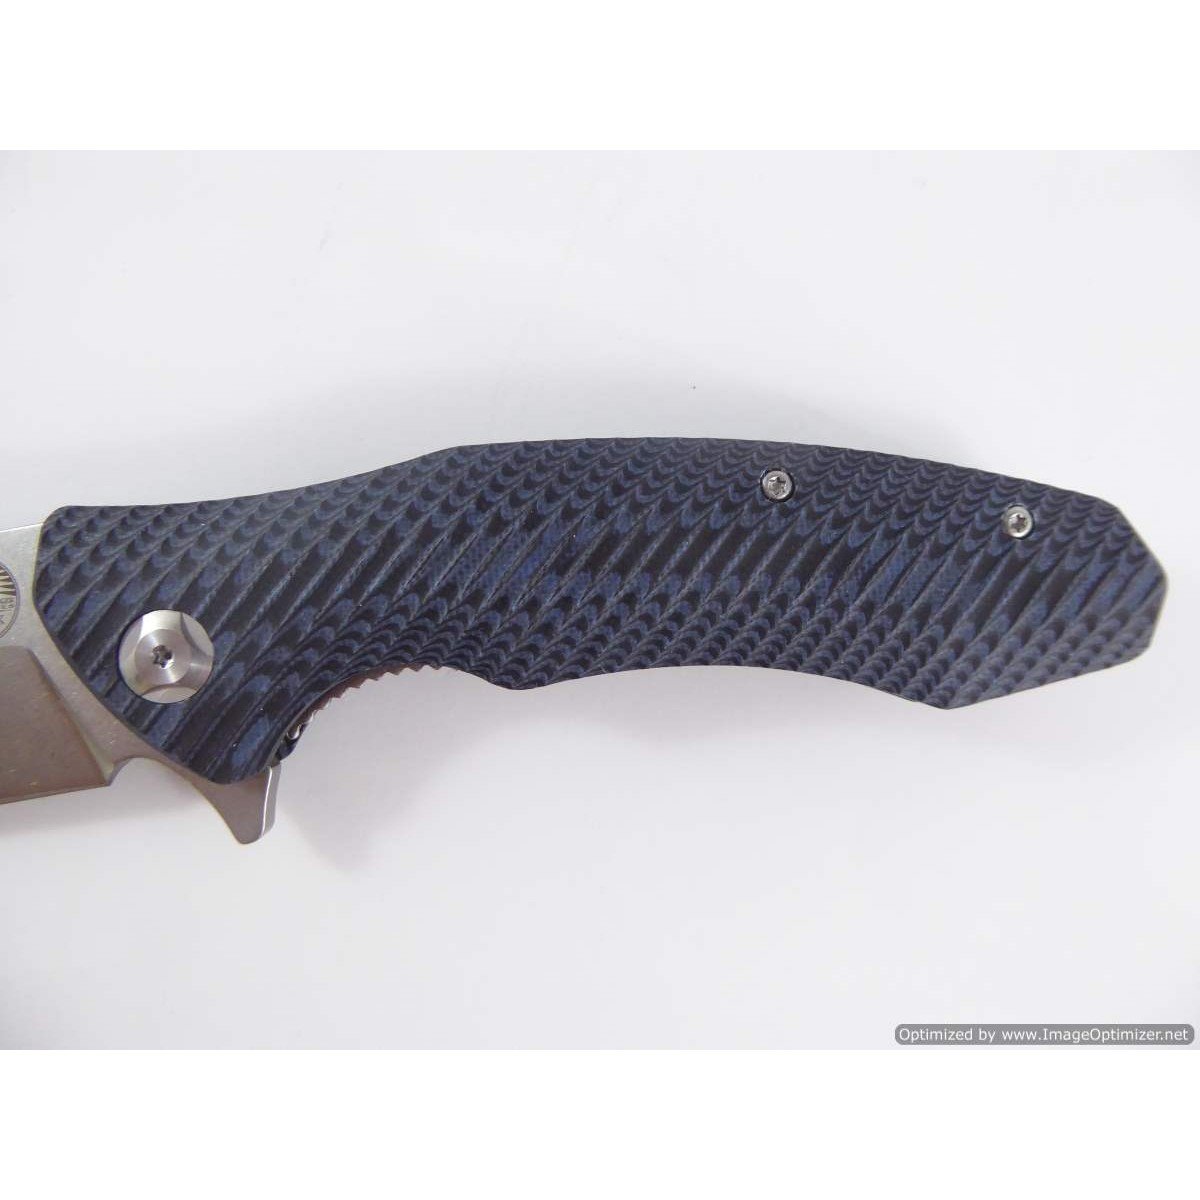 tassie tiger folding flipper pocket knife pocket knife d2 steel with g10 handle reverse tanto blade a2722 1200x1200 1